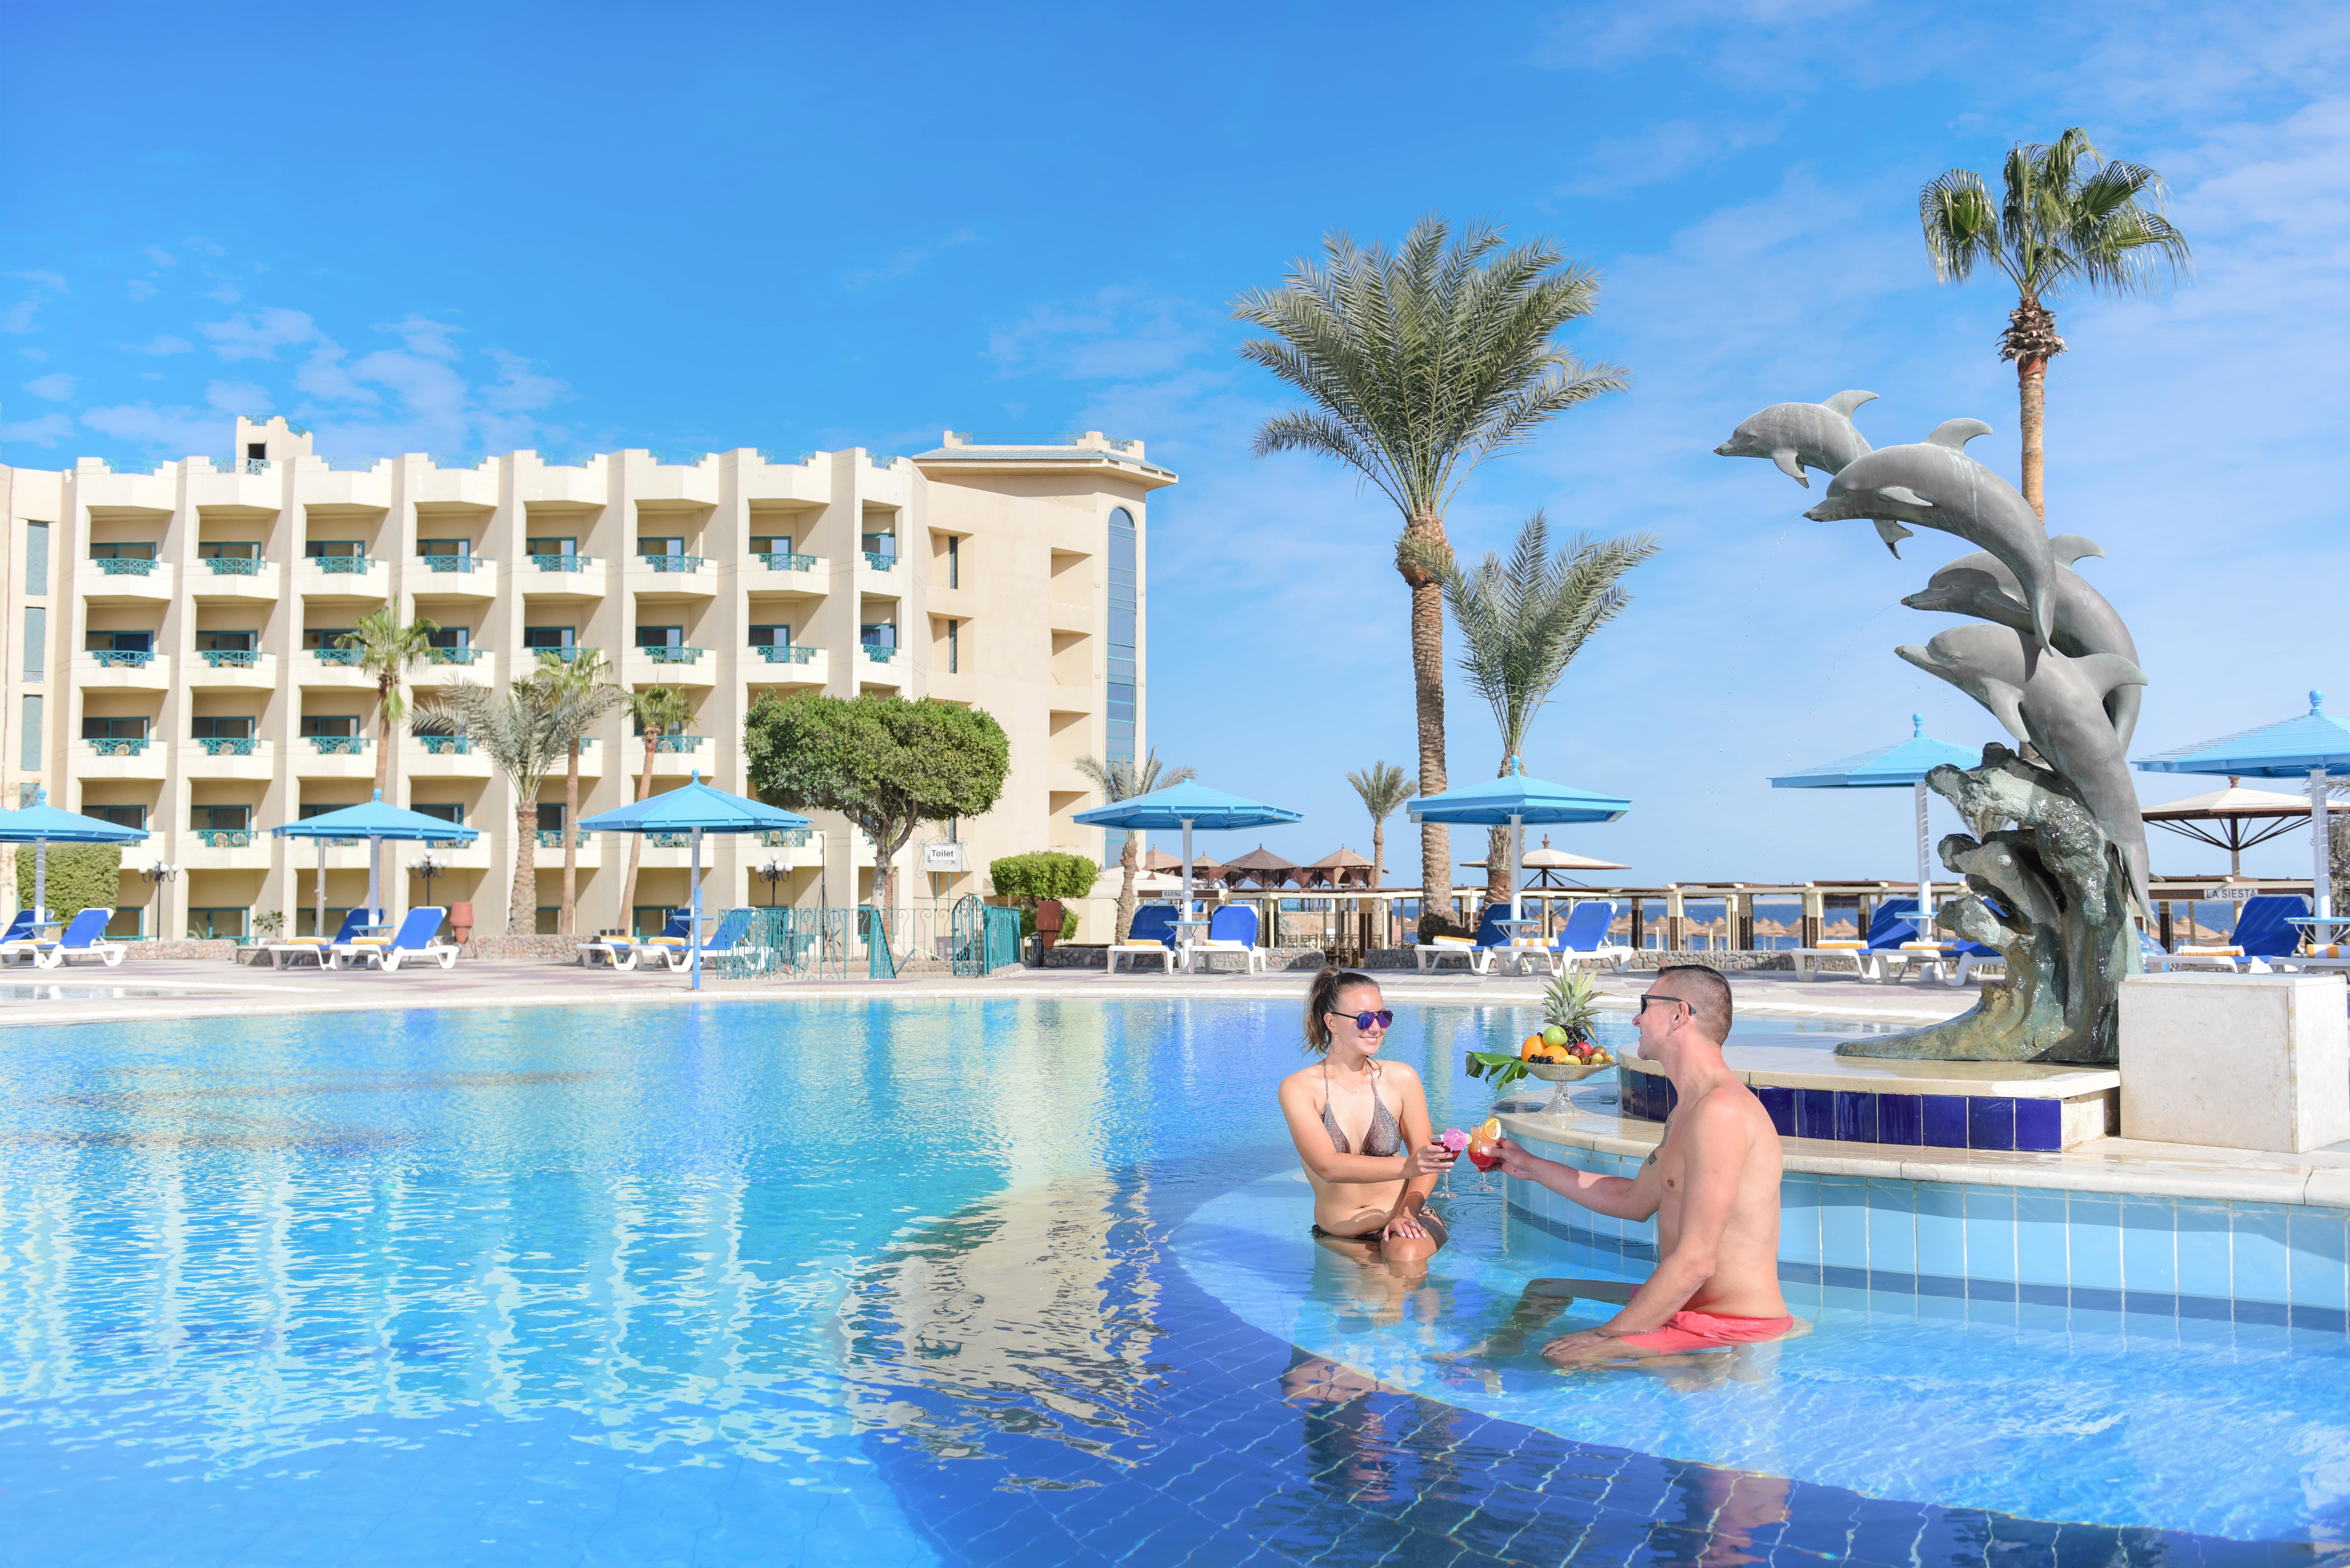 Серри хургада. 4 Отель Hotelux Marina Beach Hurghada. Египет Хургада Гранд Горизонт. Hotelux Marina Beach (ex. Premium Grand Horizon) 4*. Hotelux Marina Beach (ex. Premium Grand Horizon) 4*, Египет, Хургада.